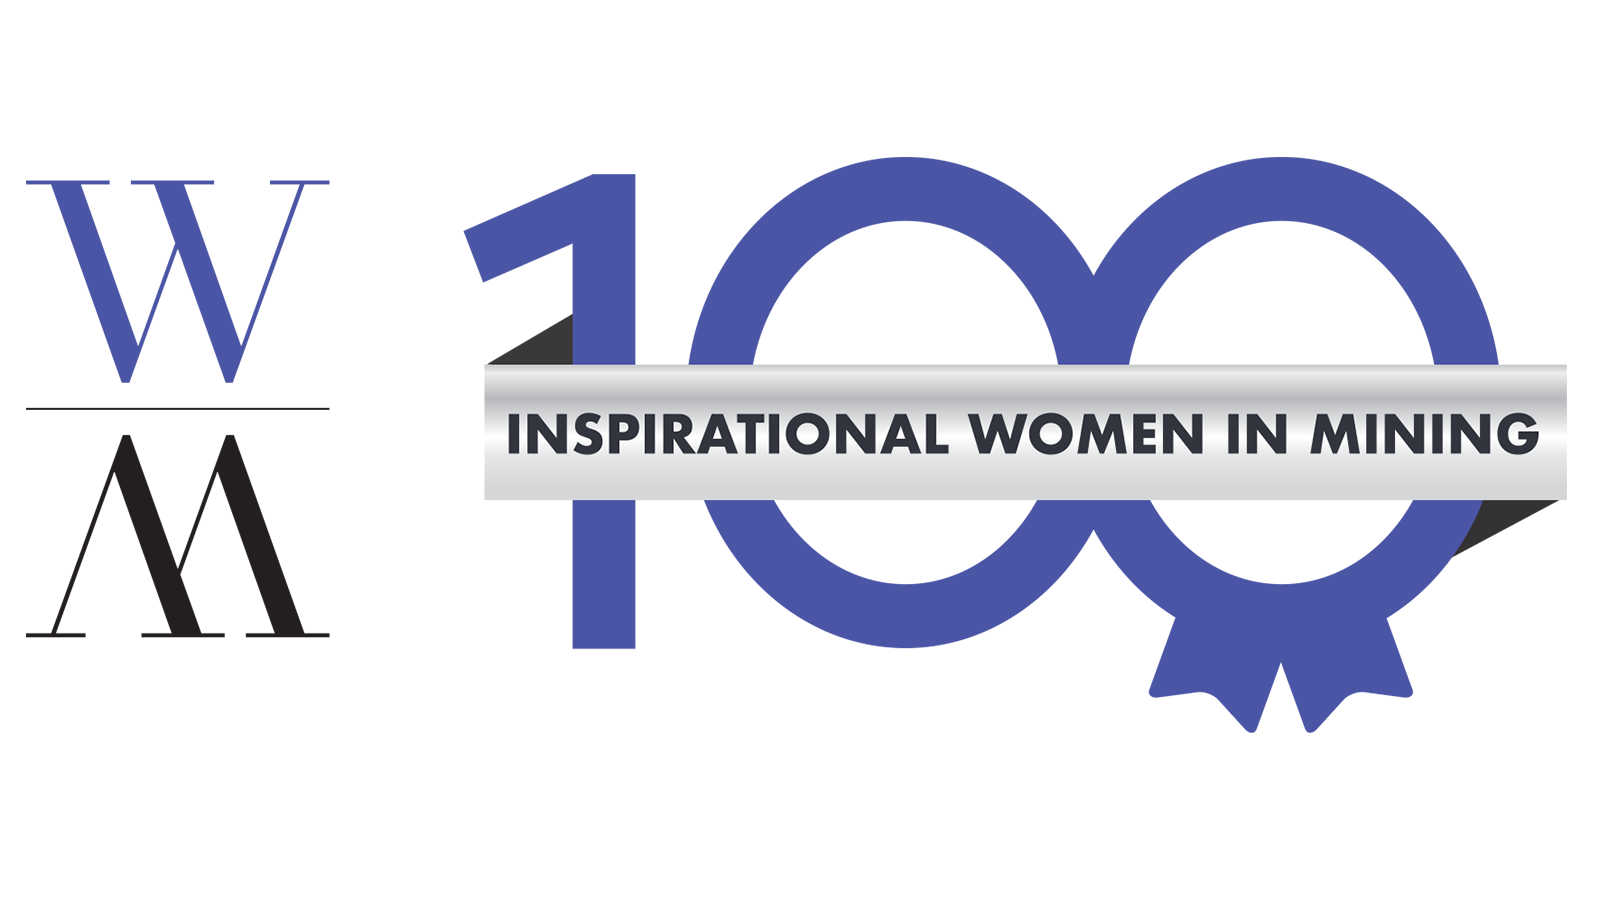 Six Glencore employees selected for Women in Mining 100 list 